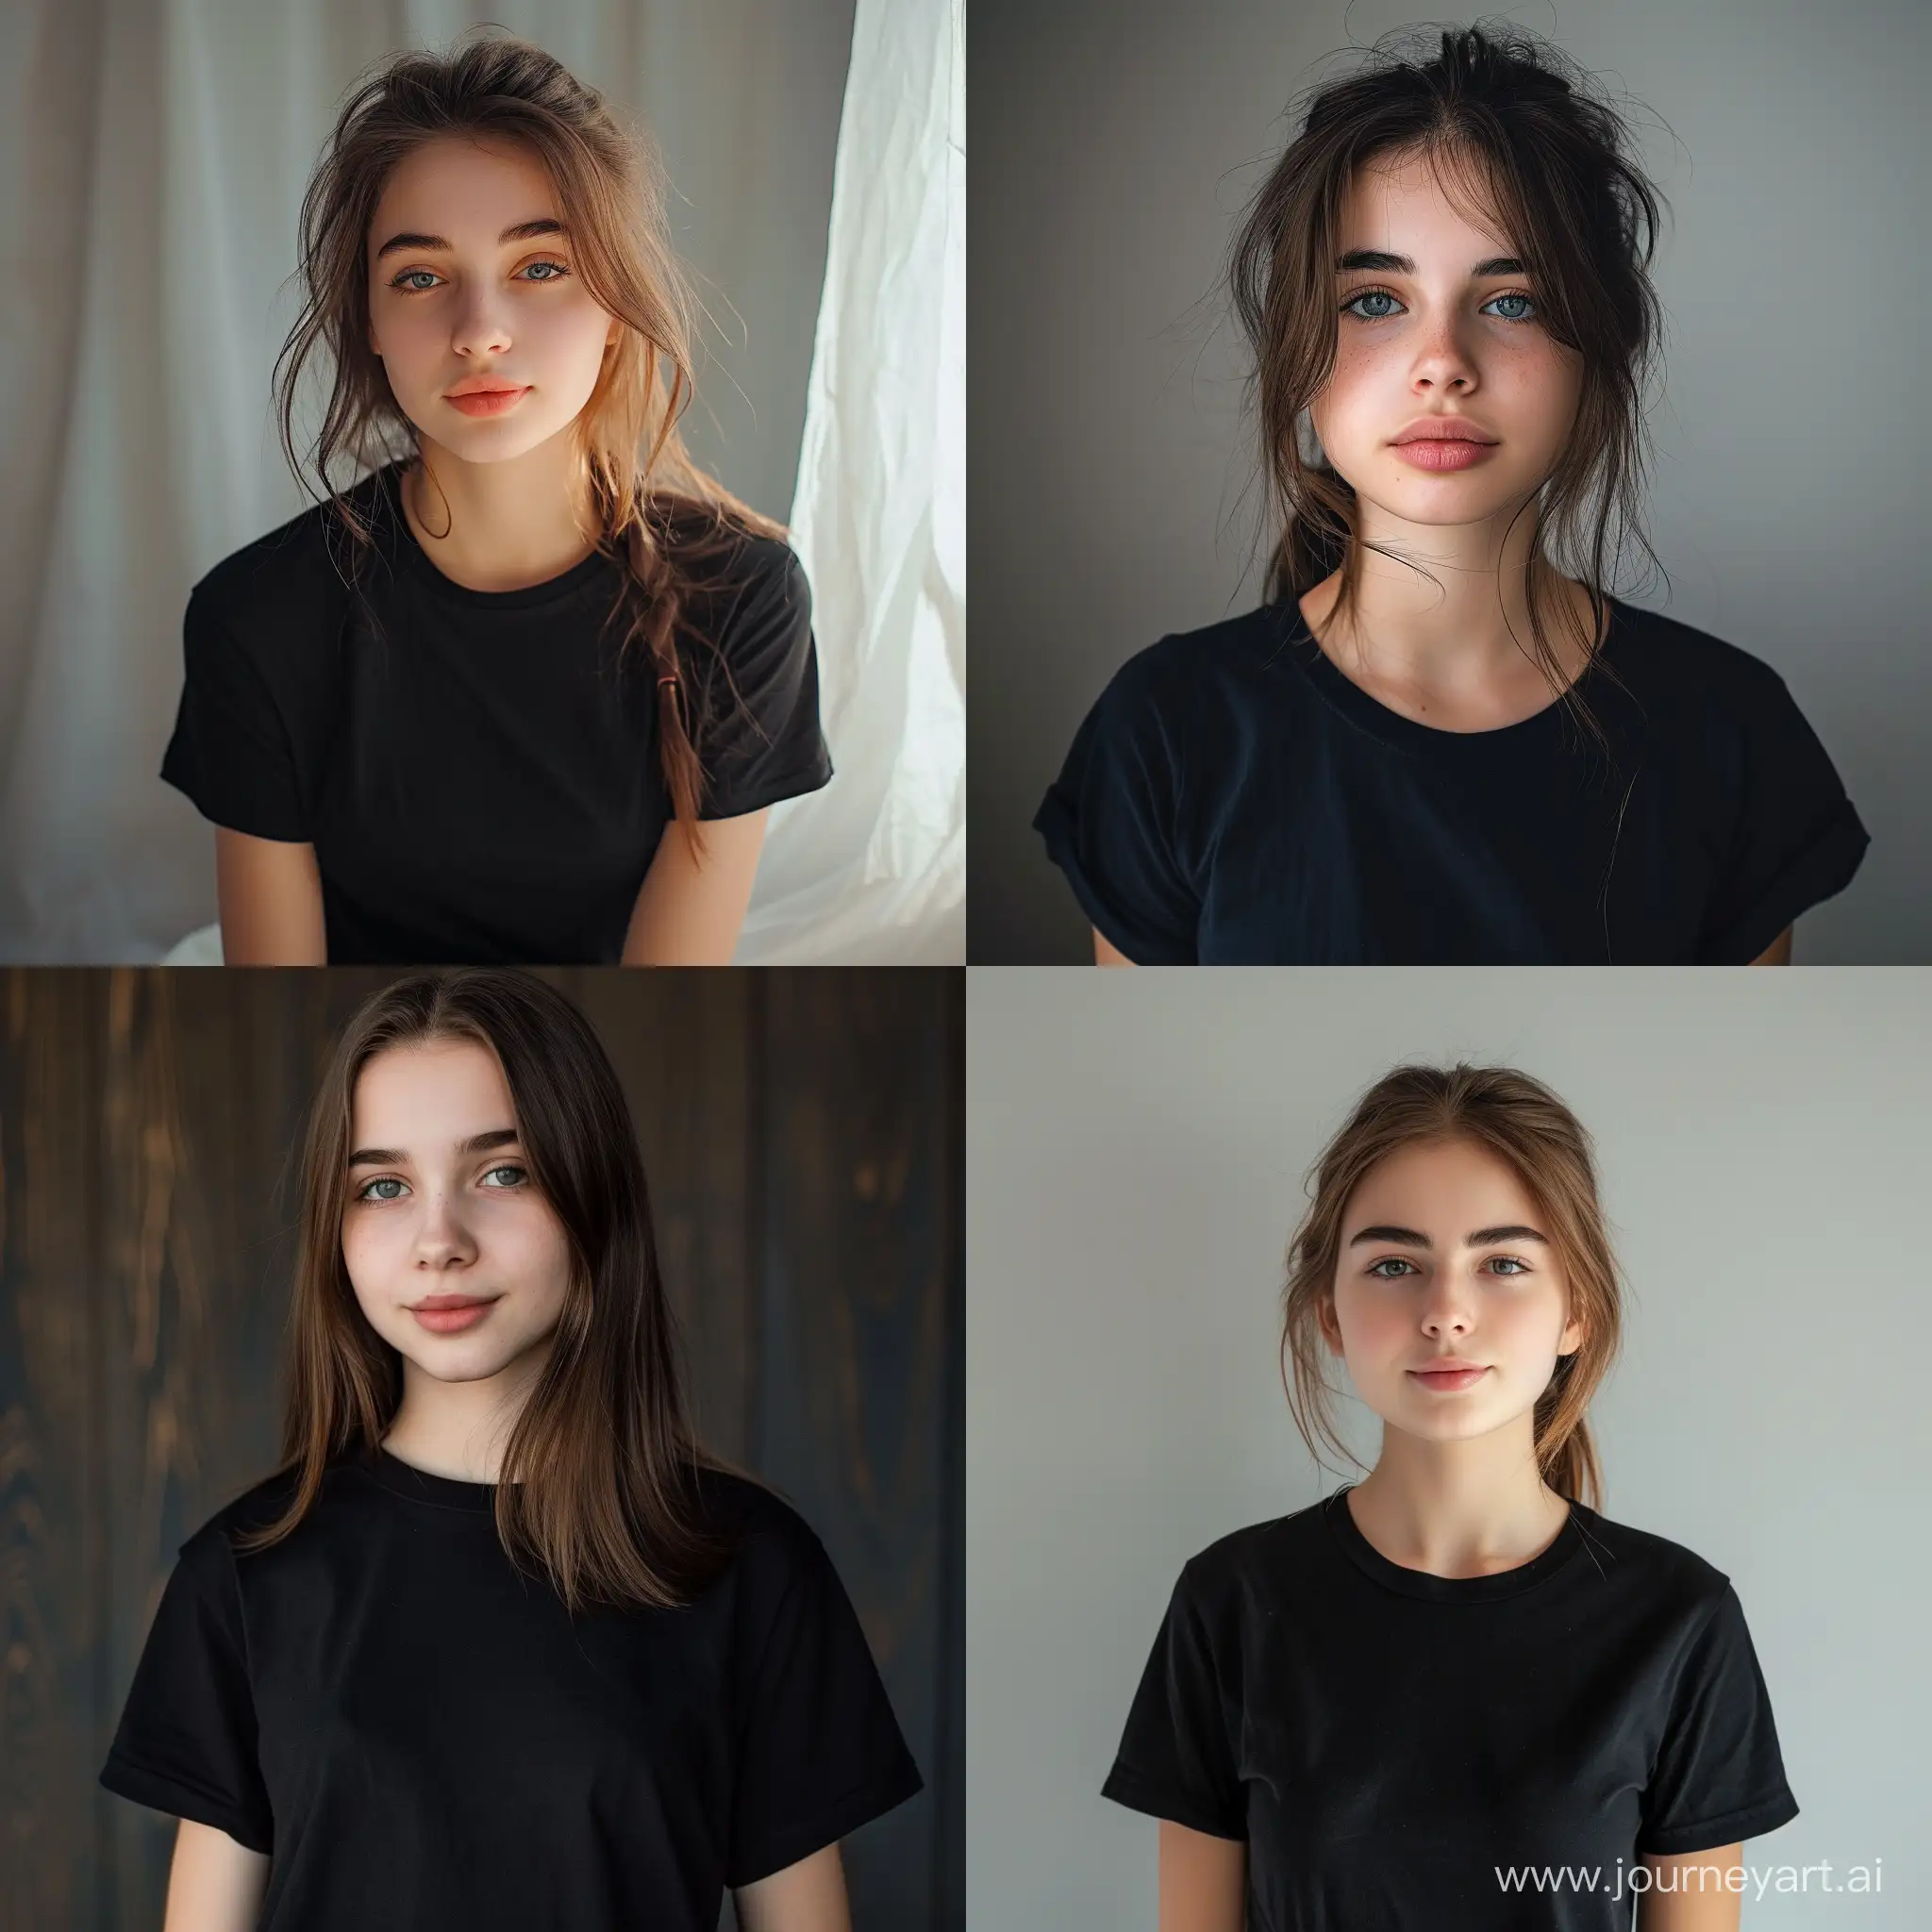 Adorable-18YearOld-Girl-in-Black-Tshirt-Captivating-Portrait